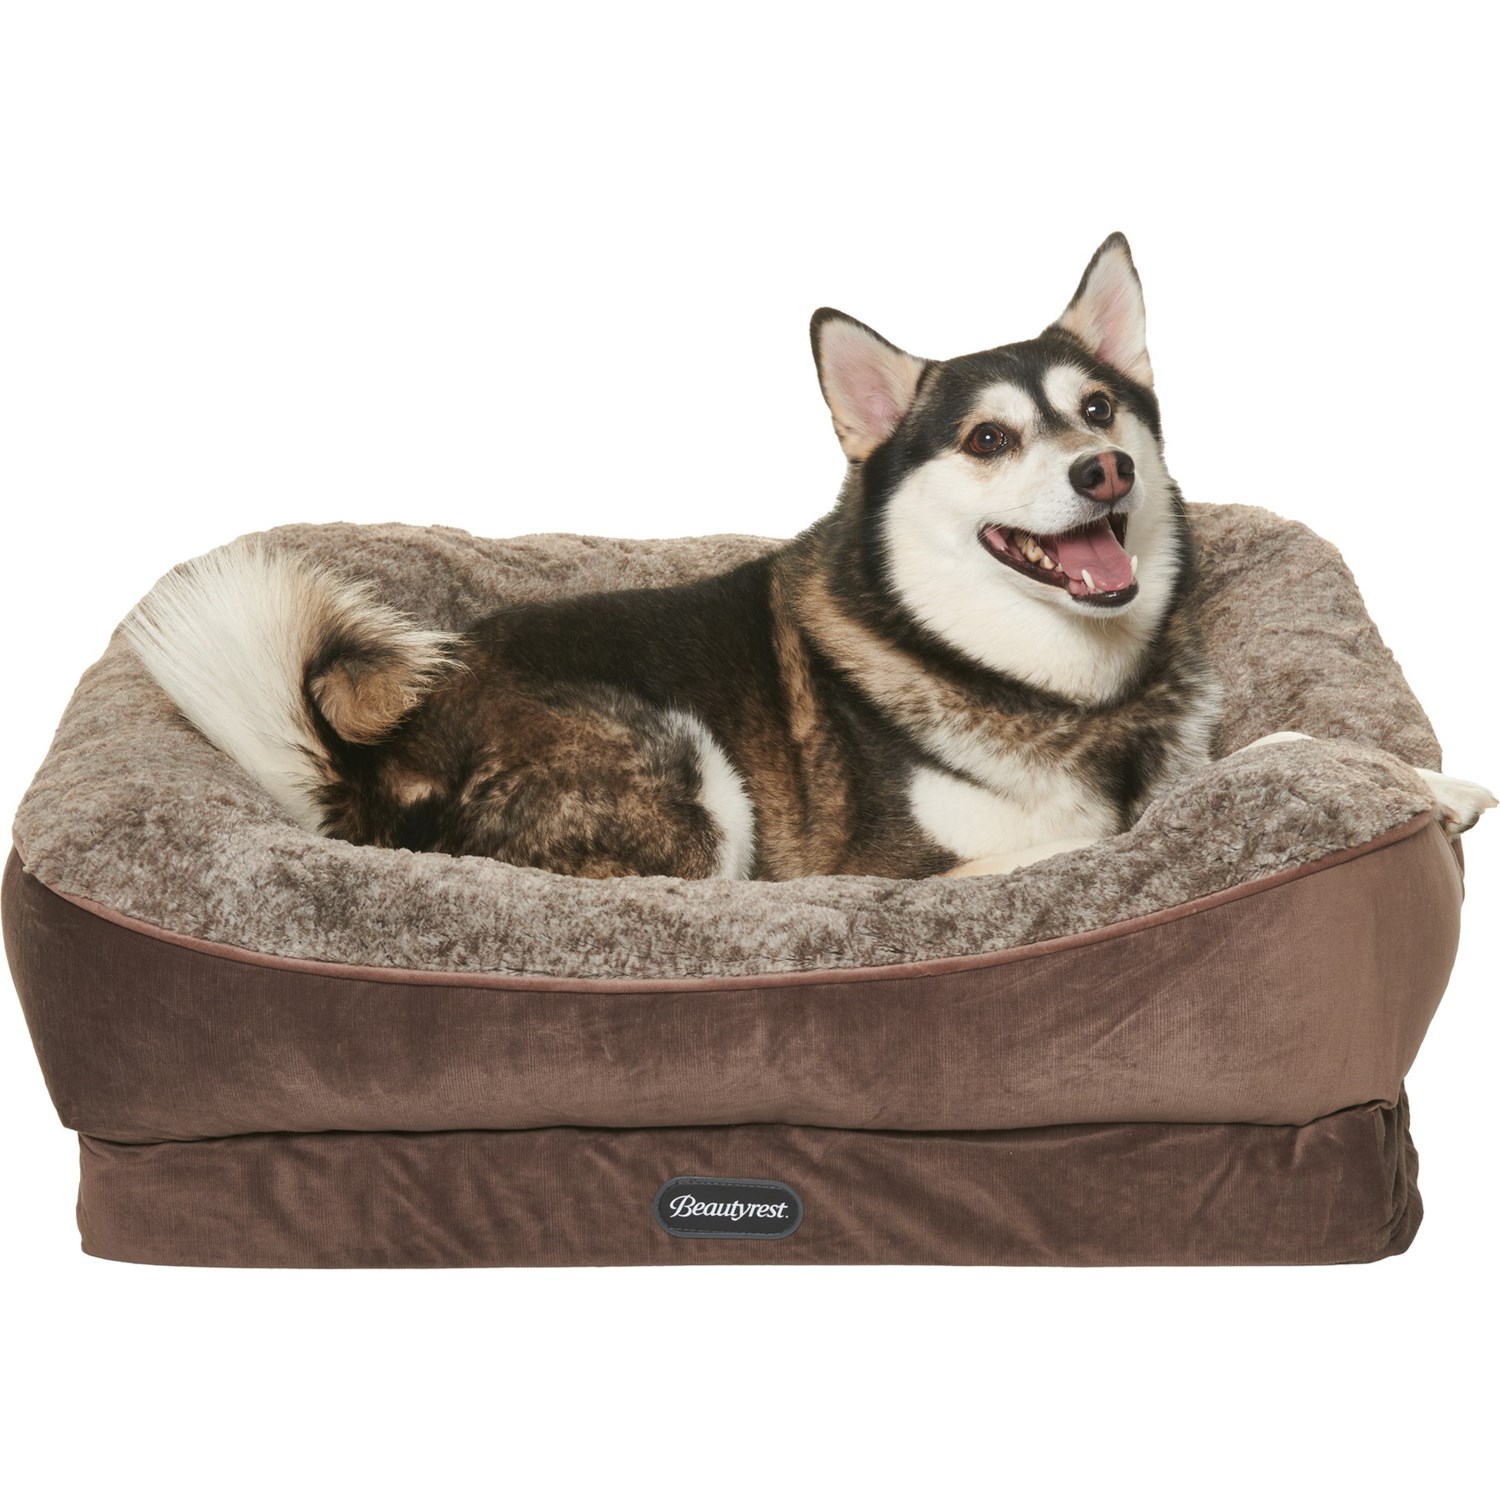 Beautyrest Ultra-Plush Cuddler Dog Bed - 32x28”